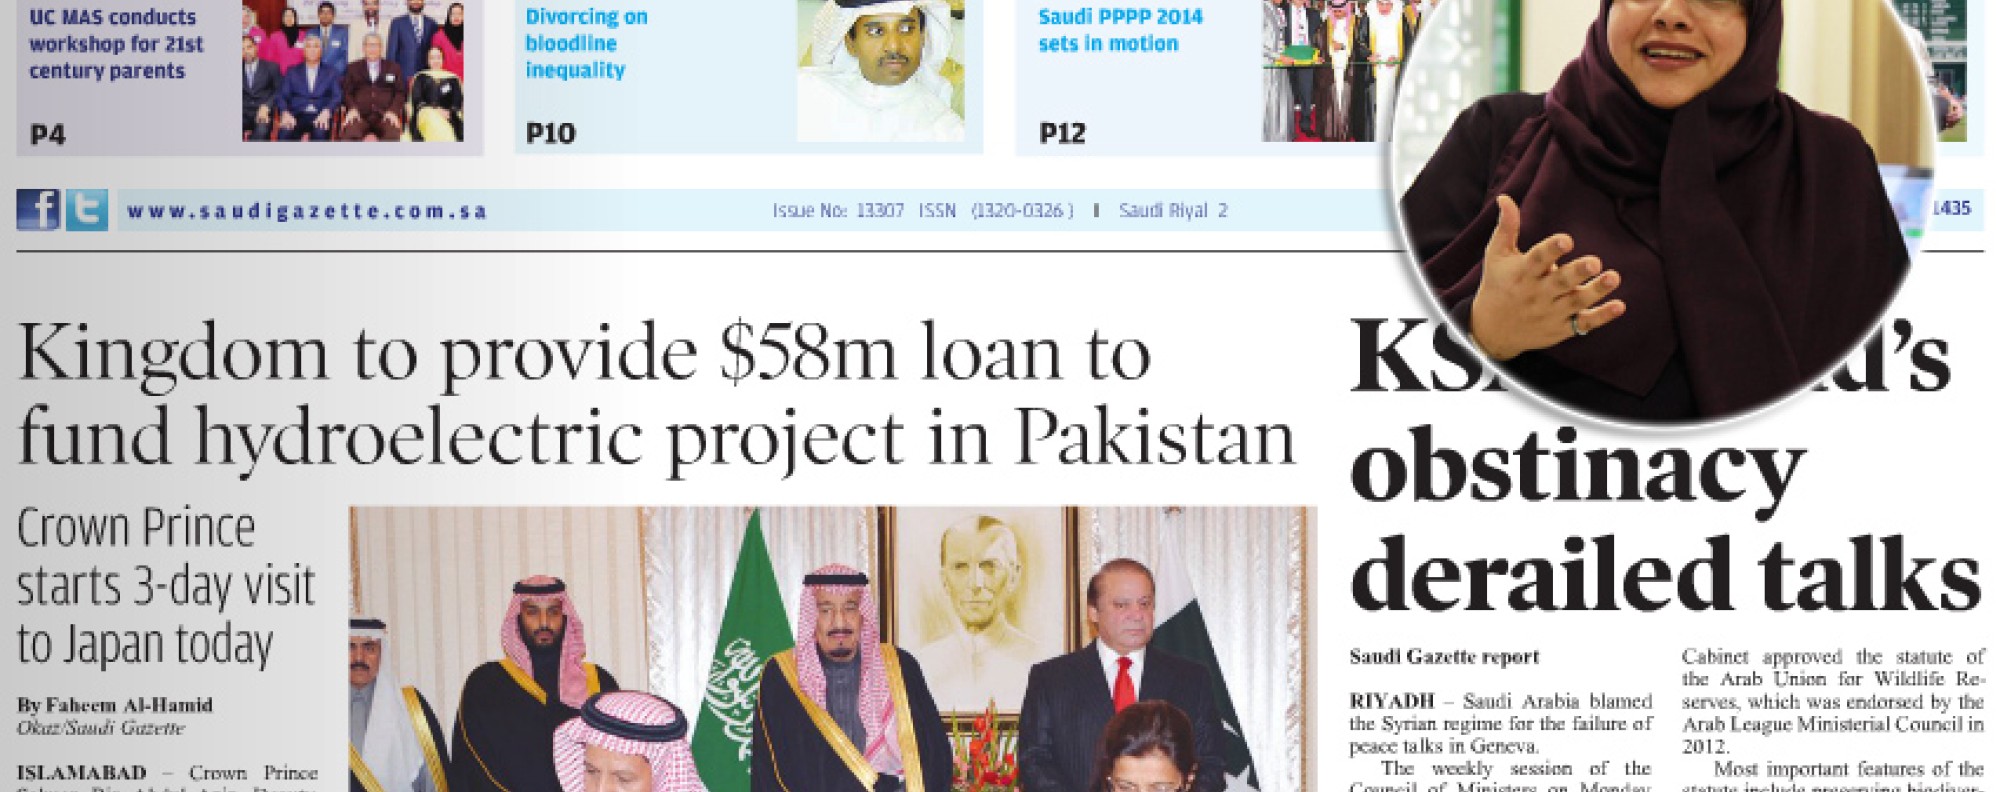 Saudi gazette news today